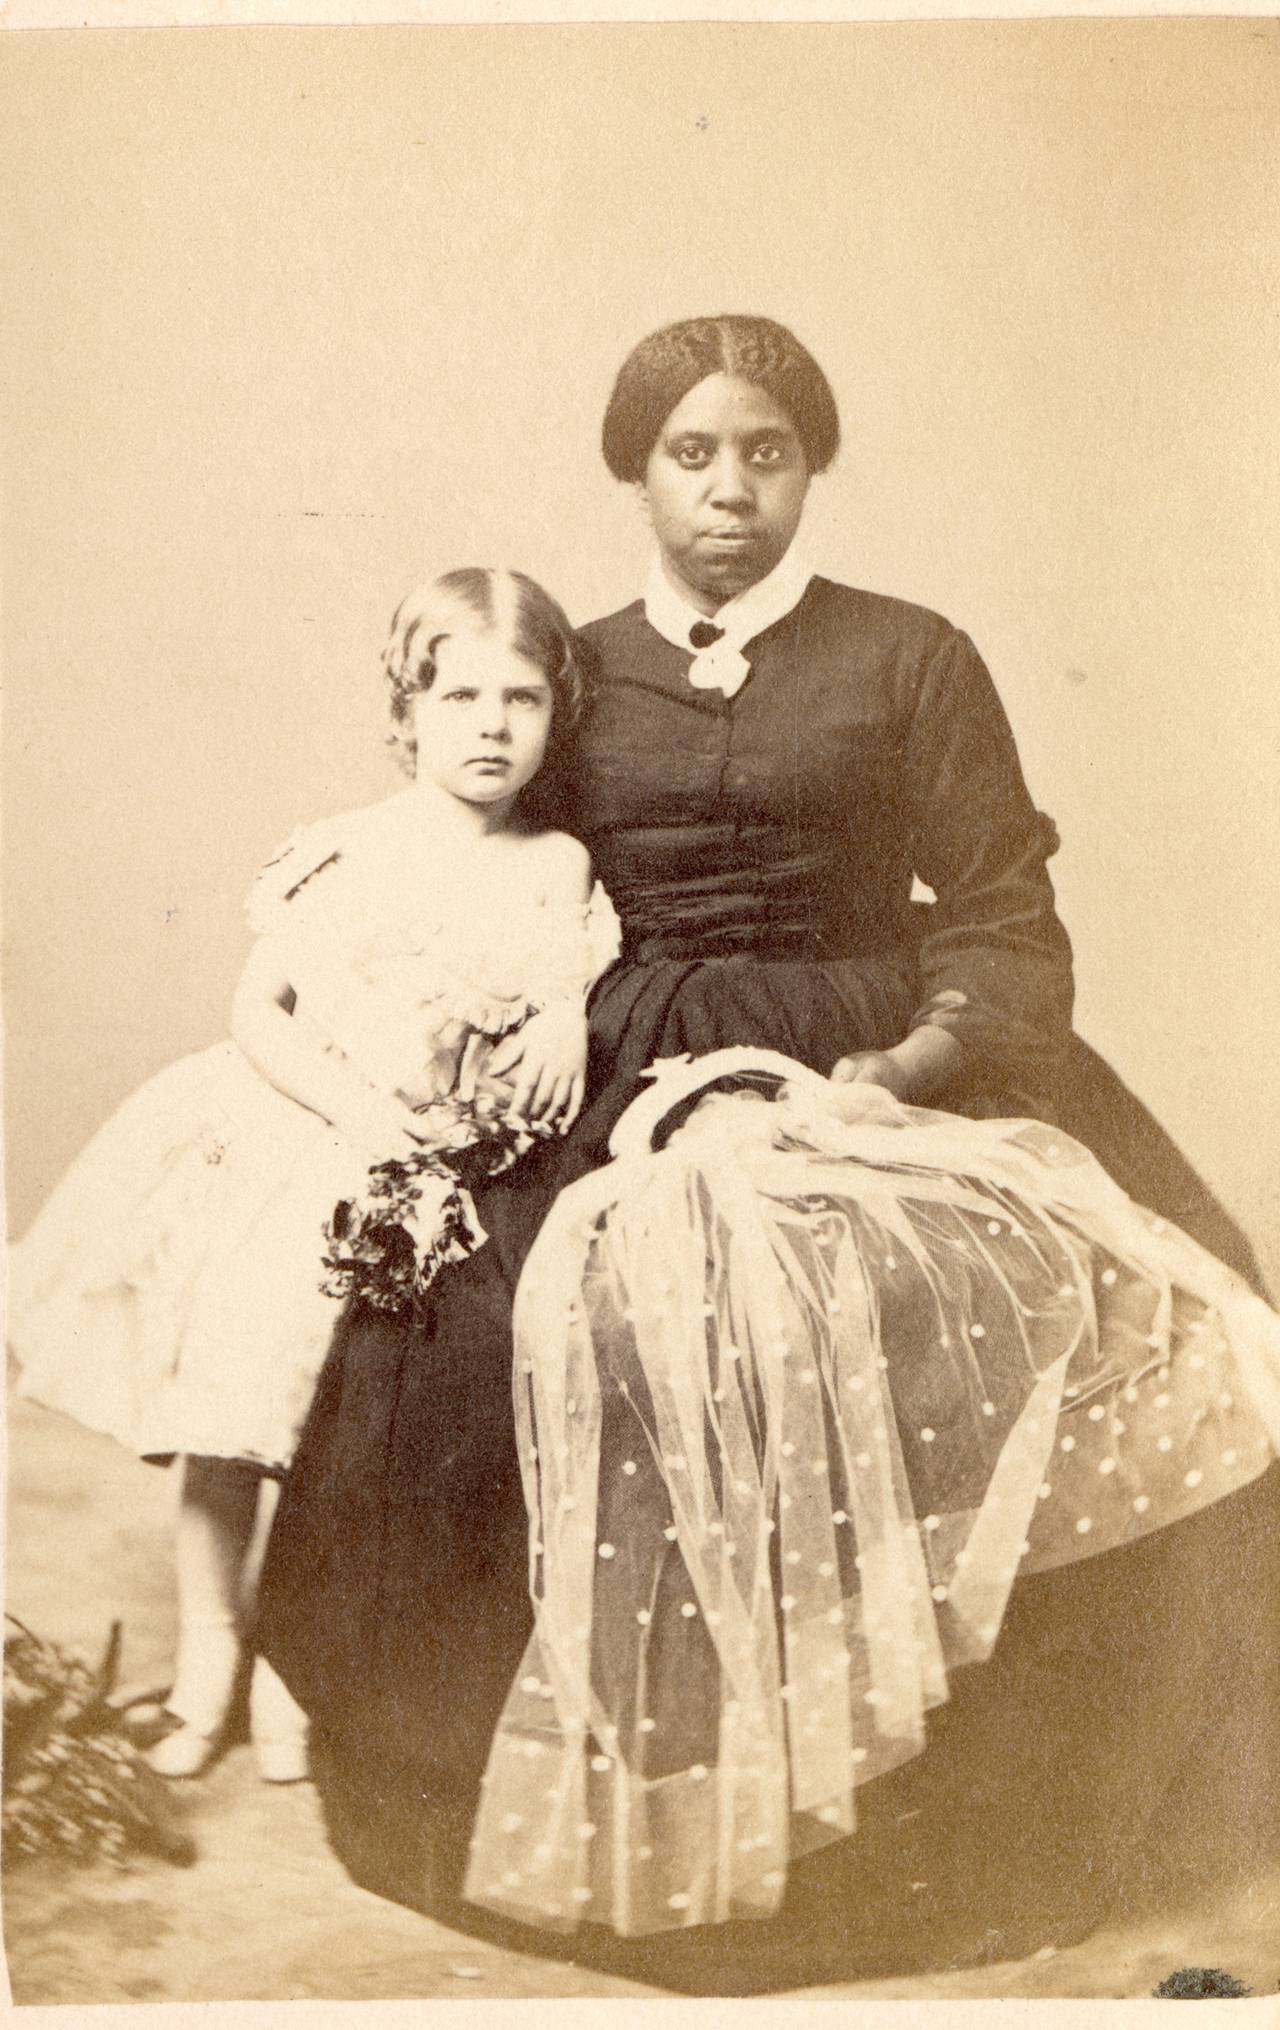 A carte-de-visite, or calling card photograph, of Nancy Davis and Eliza Ridgeley III. Nancy Davis was enslaved at Hampton, where she cared for the Ridgeley children.